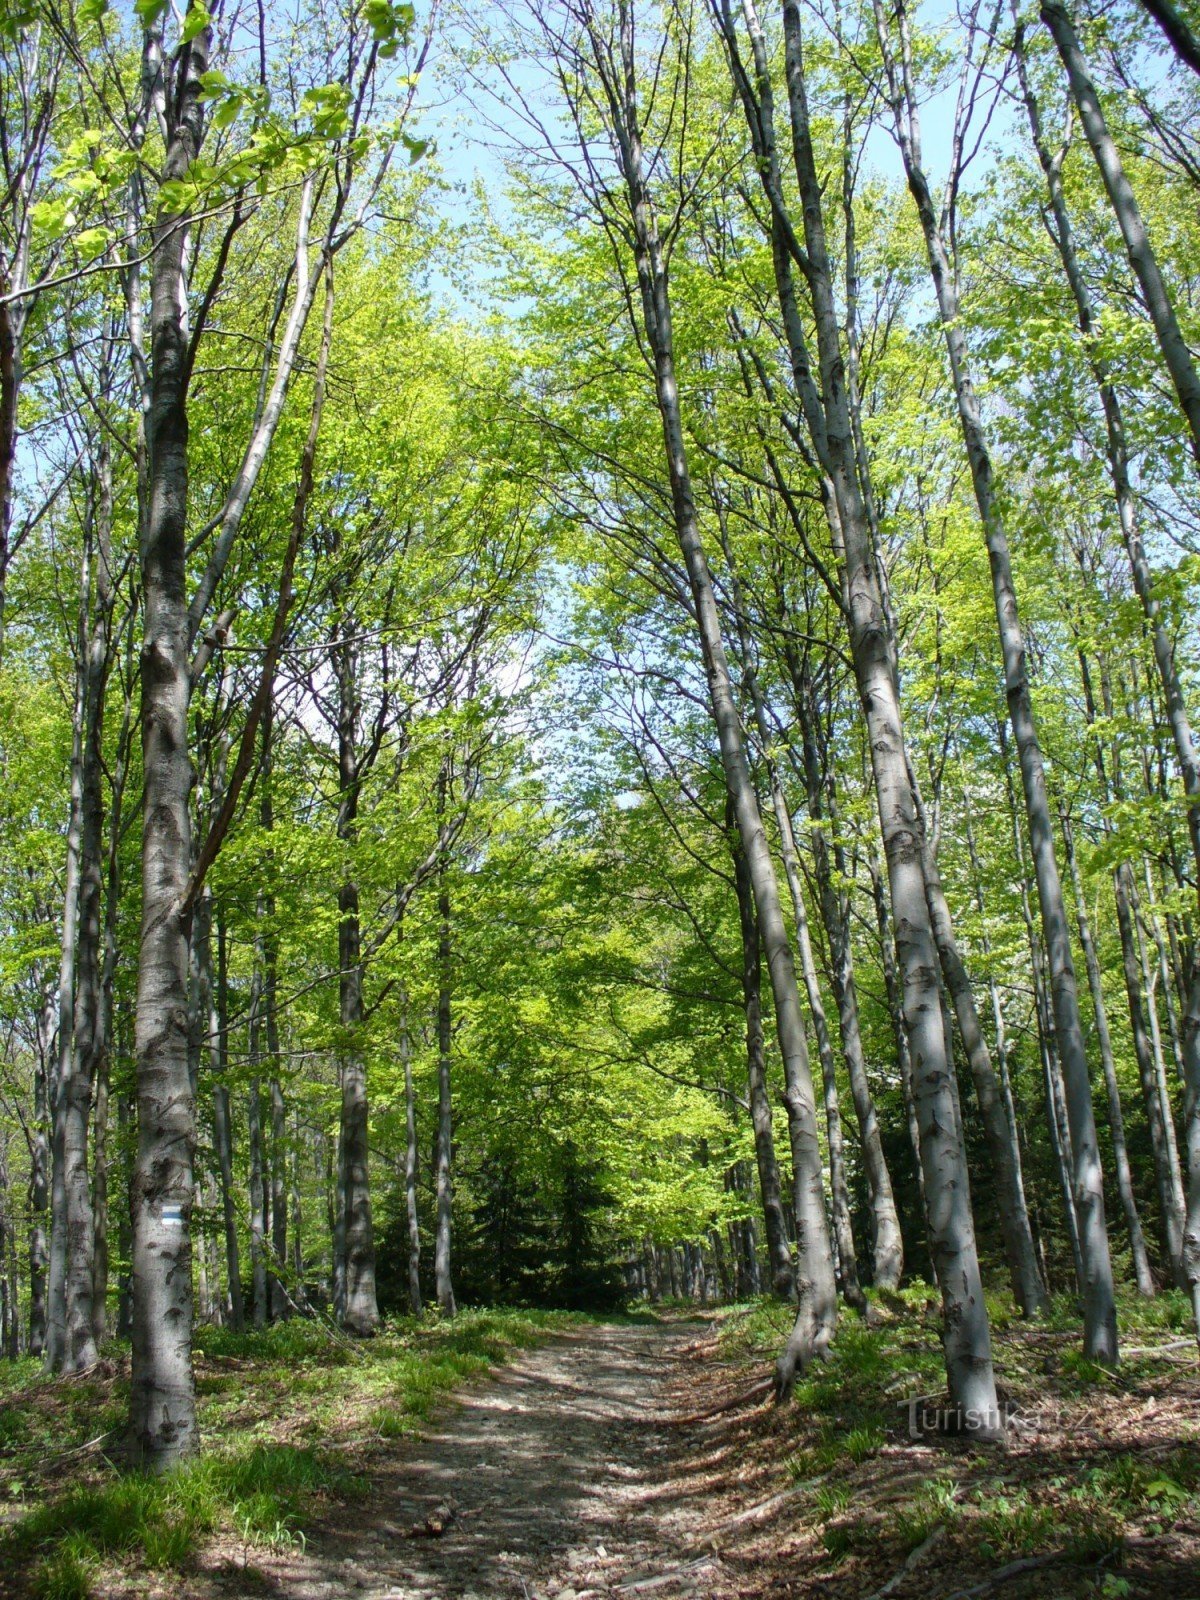 The road to the Jičínky spring